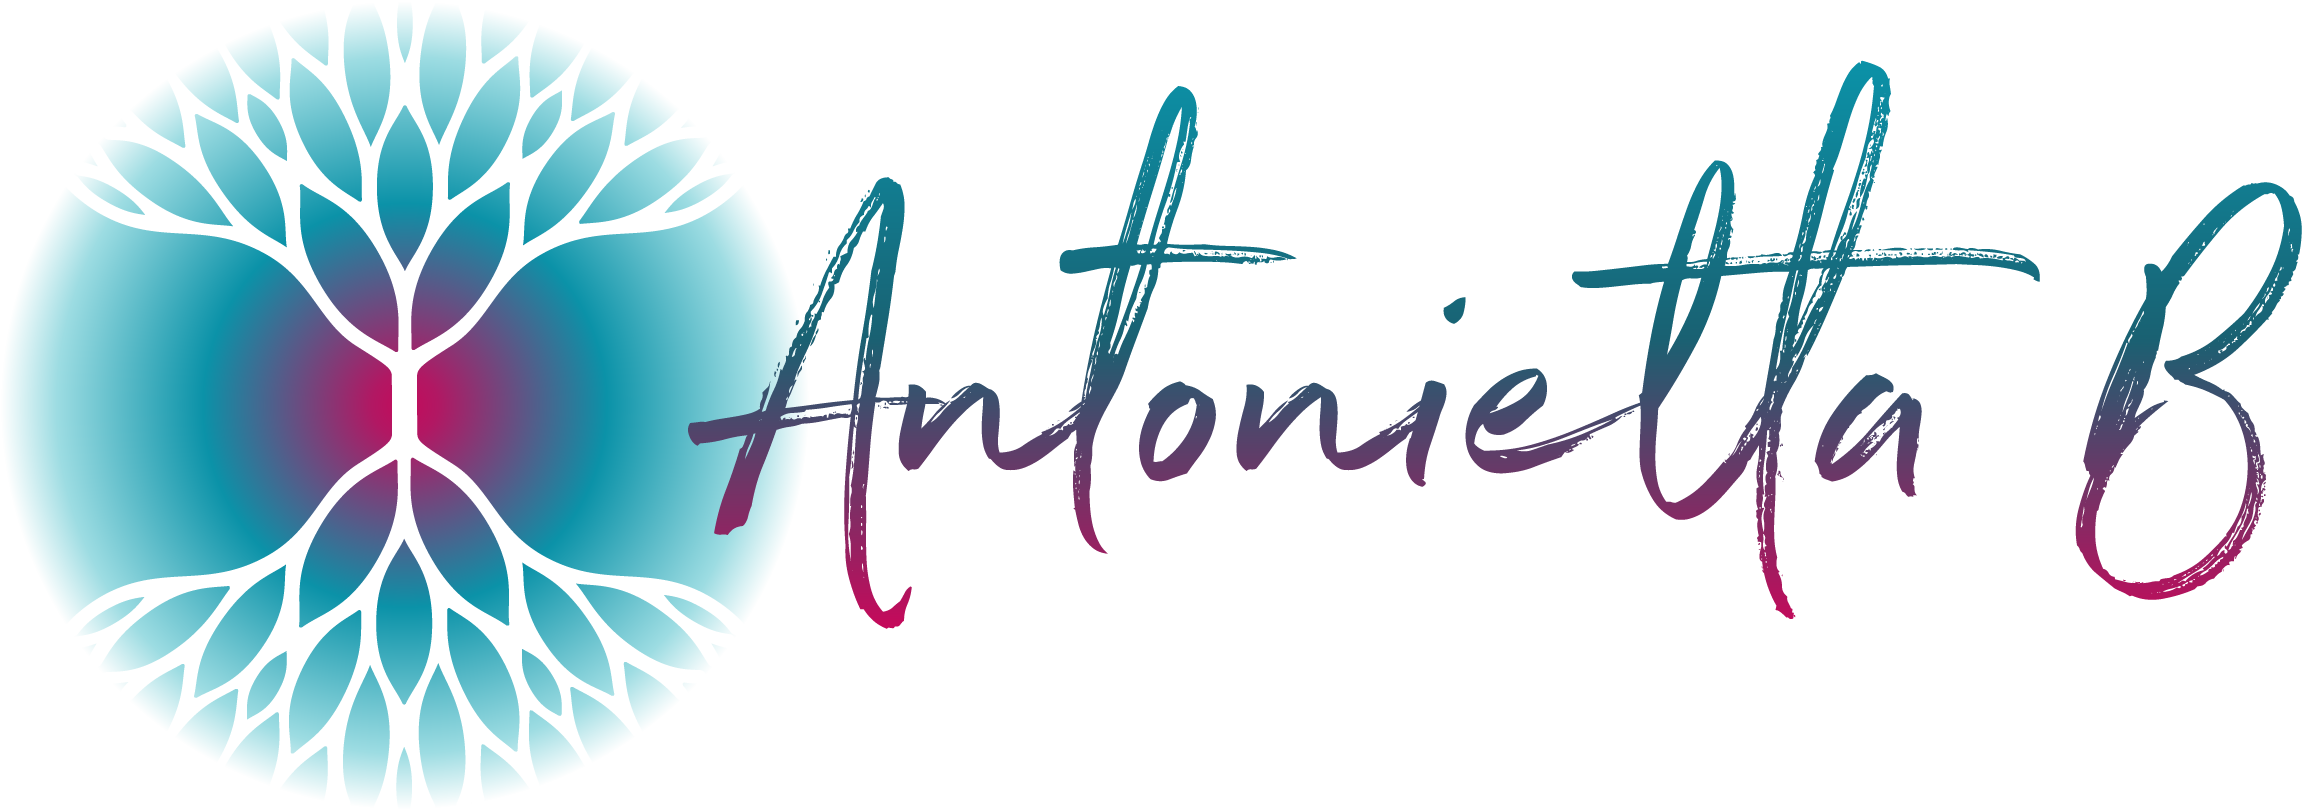 Antonietta Brienza logo